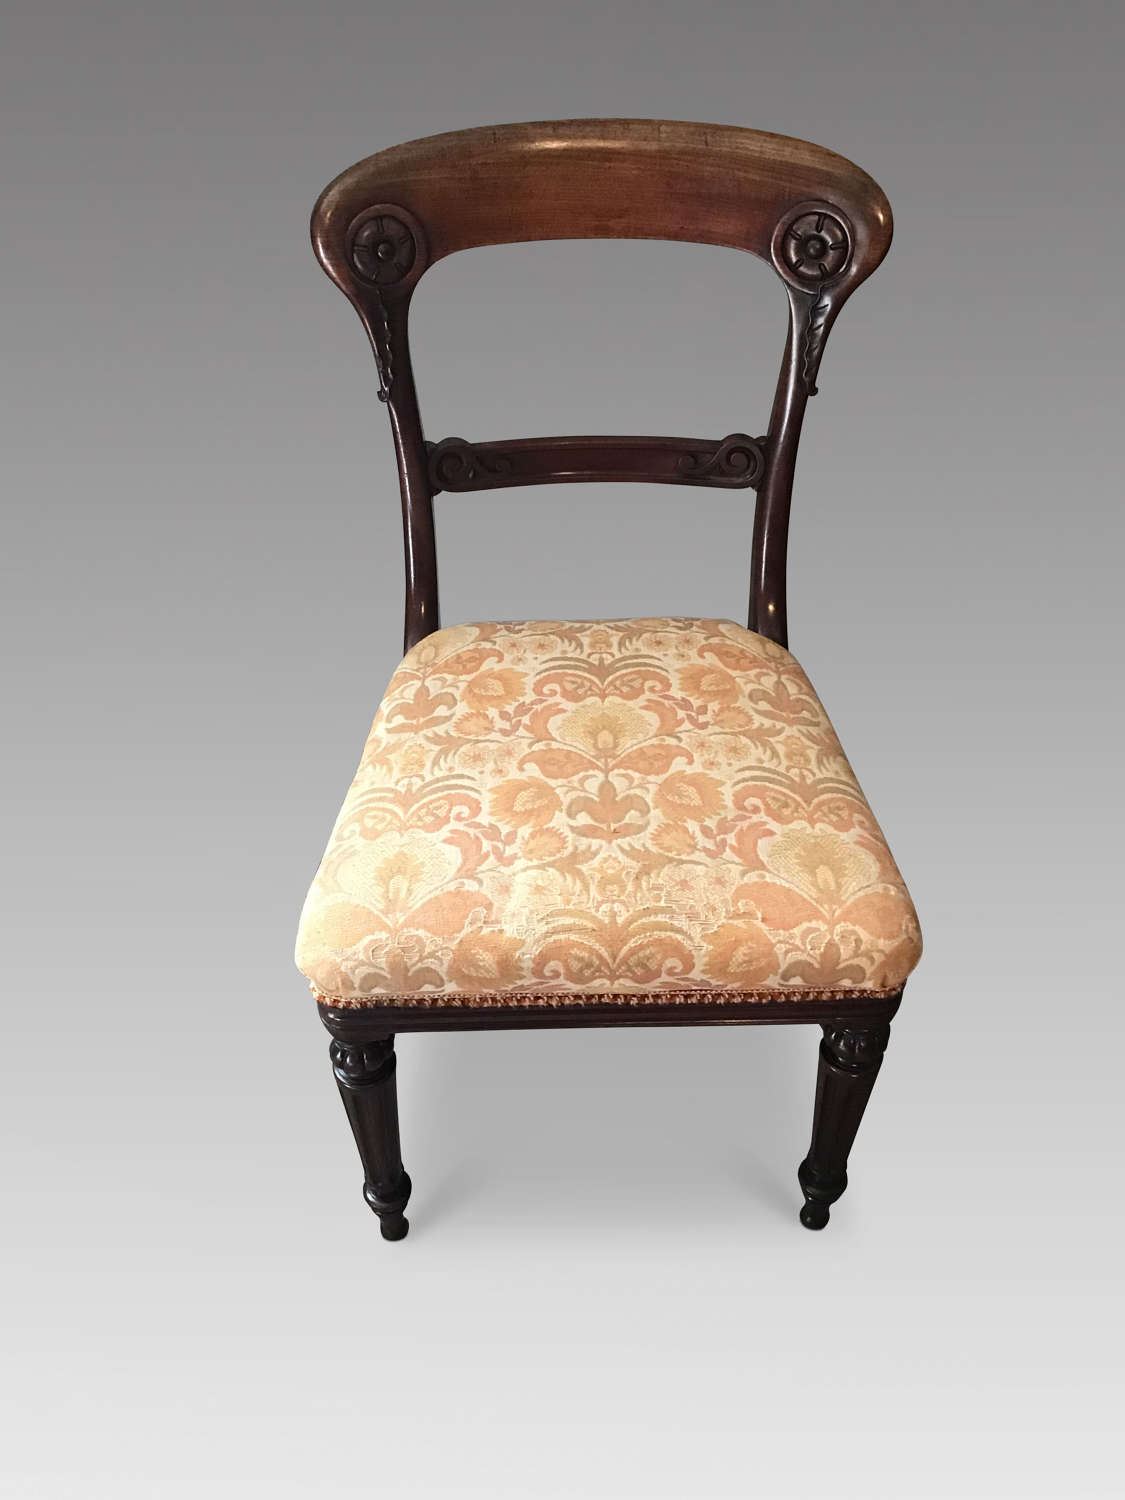 Antique mahogany chair